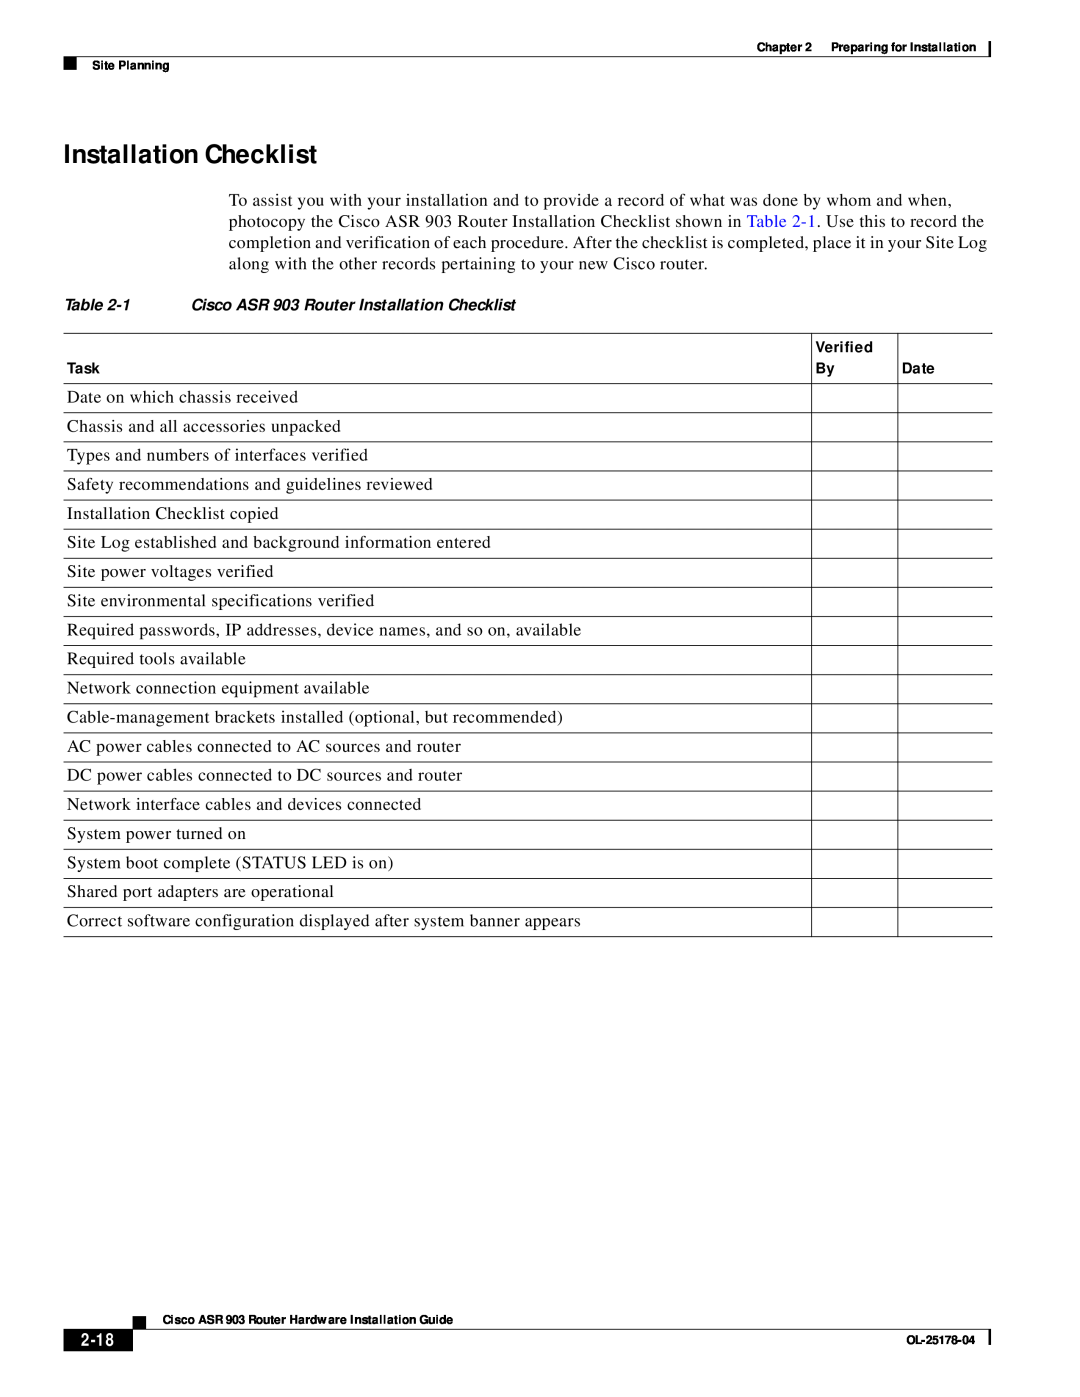 Cisco Systems ASR 903 manual Installation Checklist, 2-18 